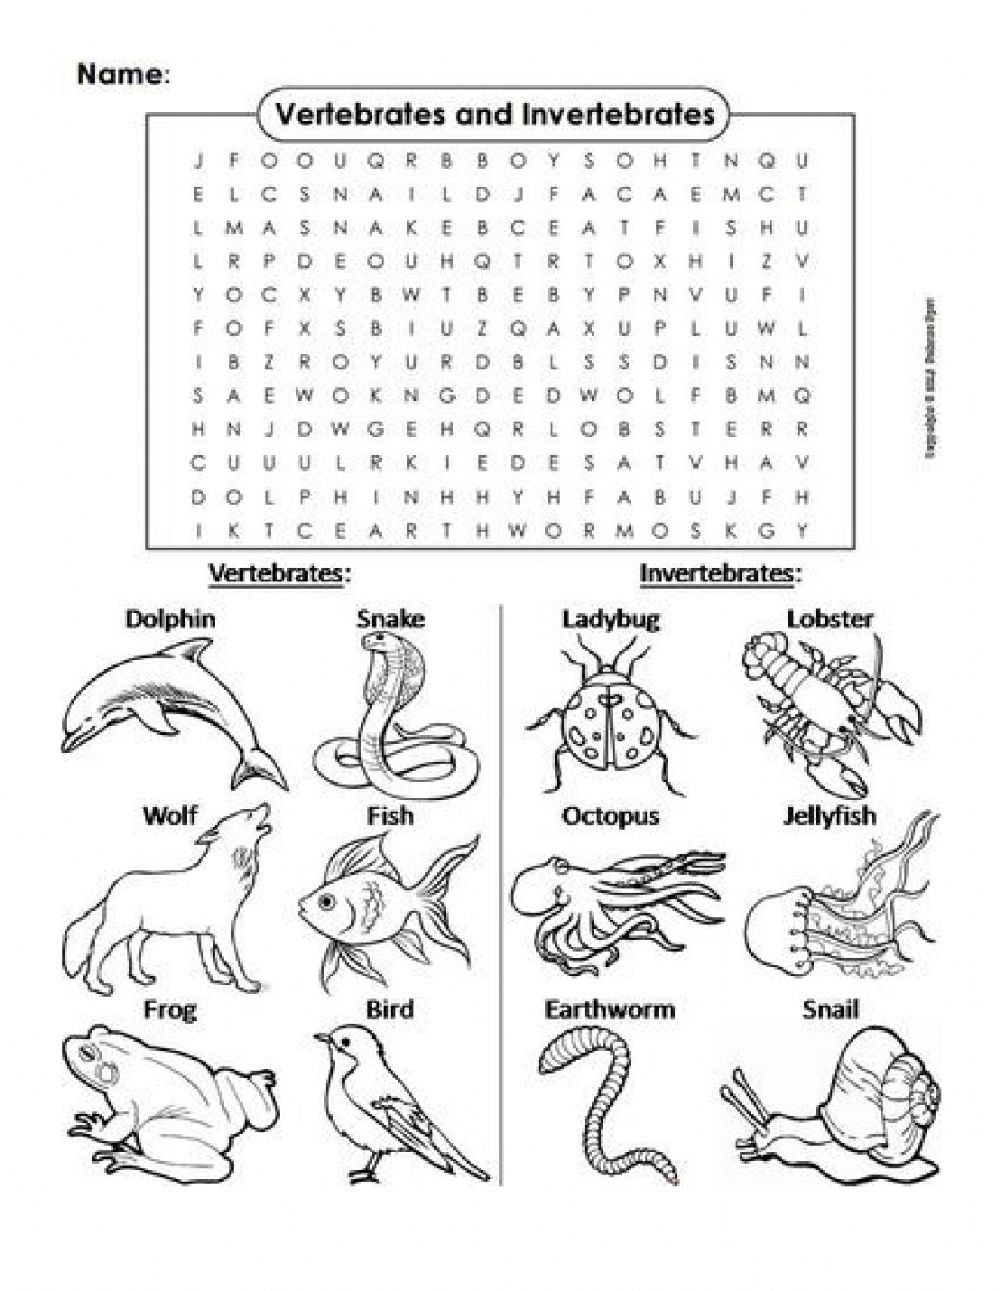 vertebrates and invertebrates worksheets pdf